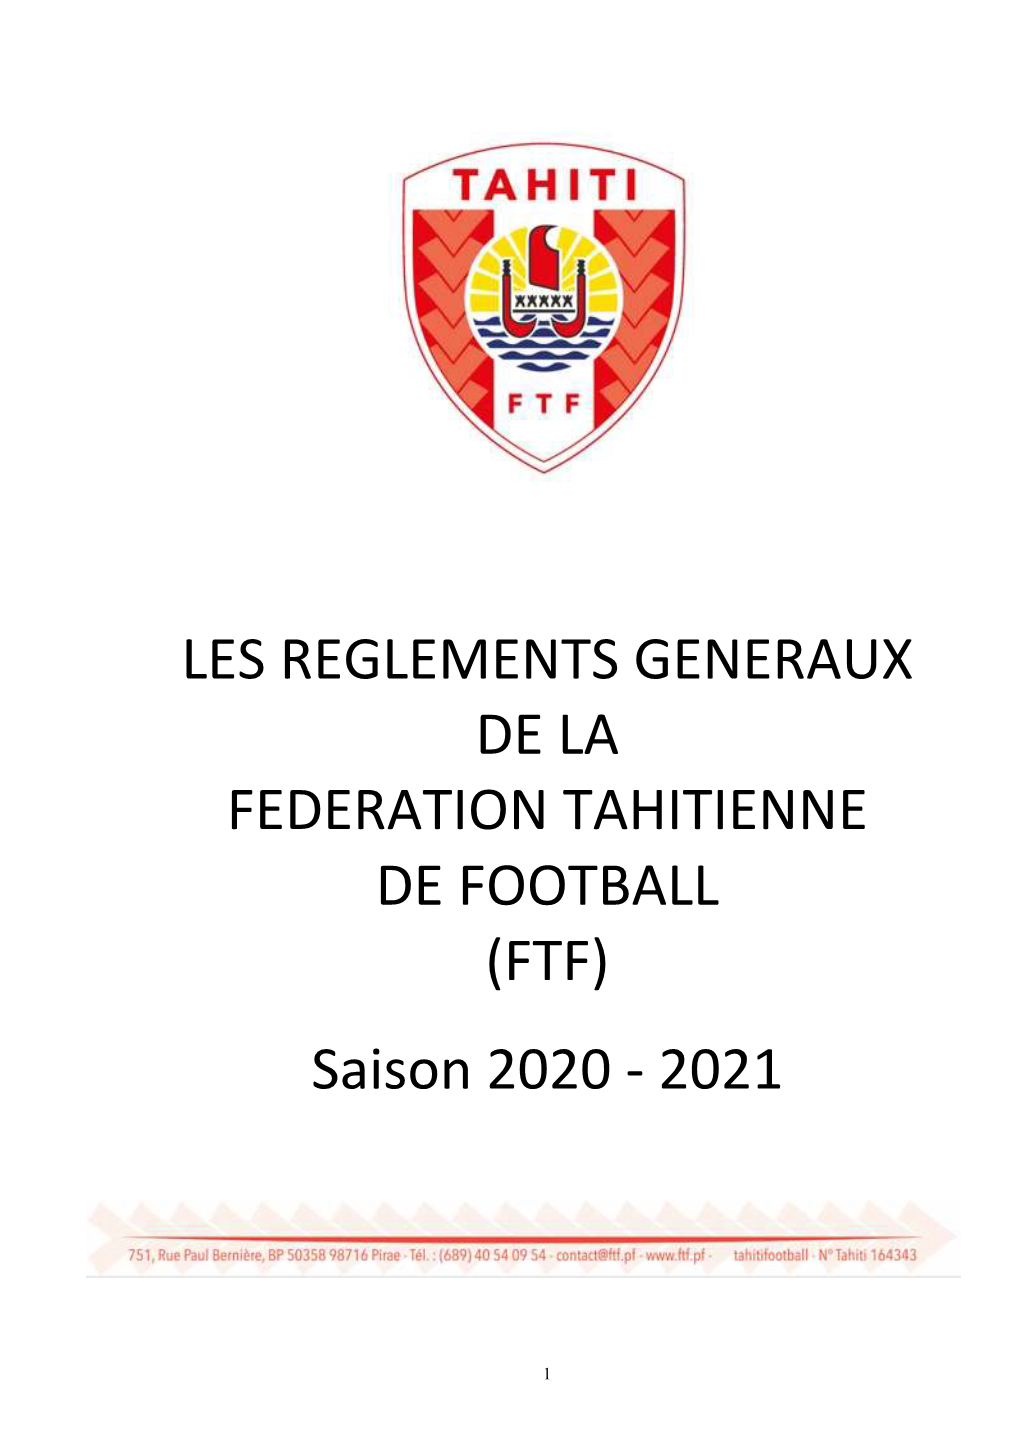 Les Reglements Generaux De La Federation Tahitienne De Football (Ftf)